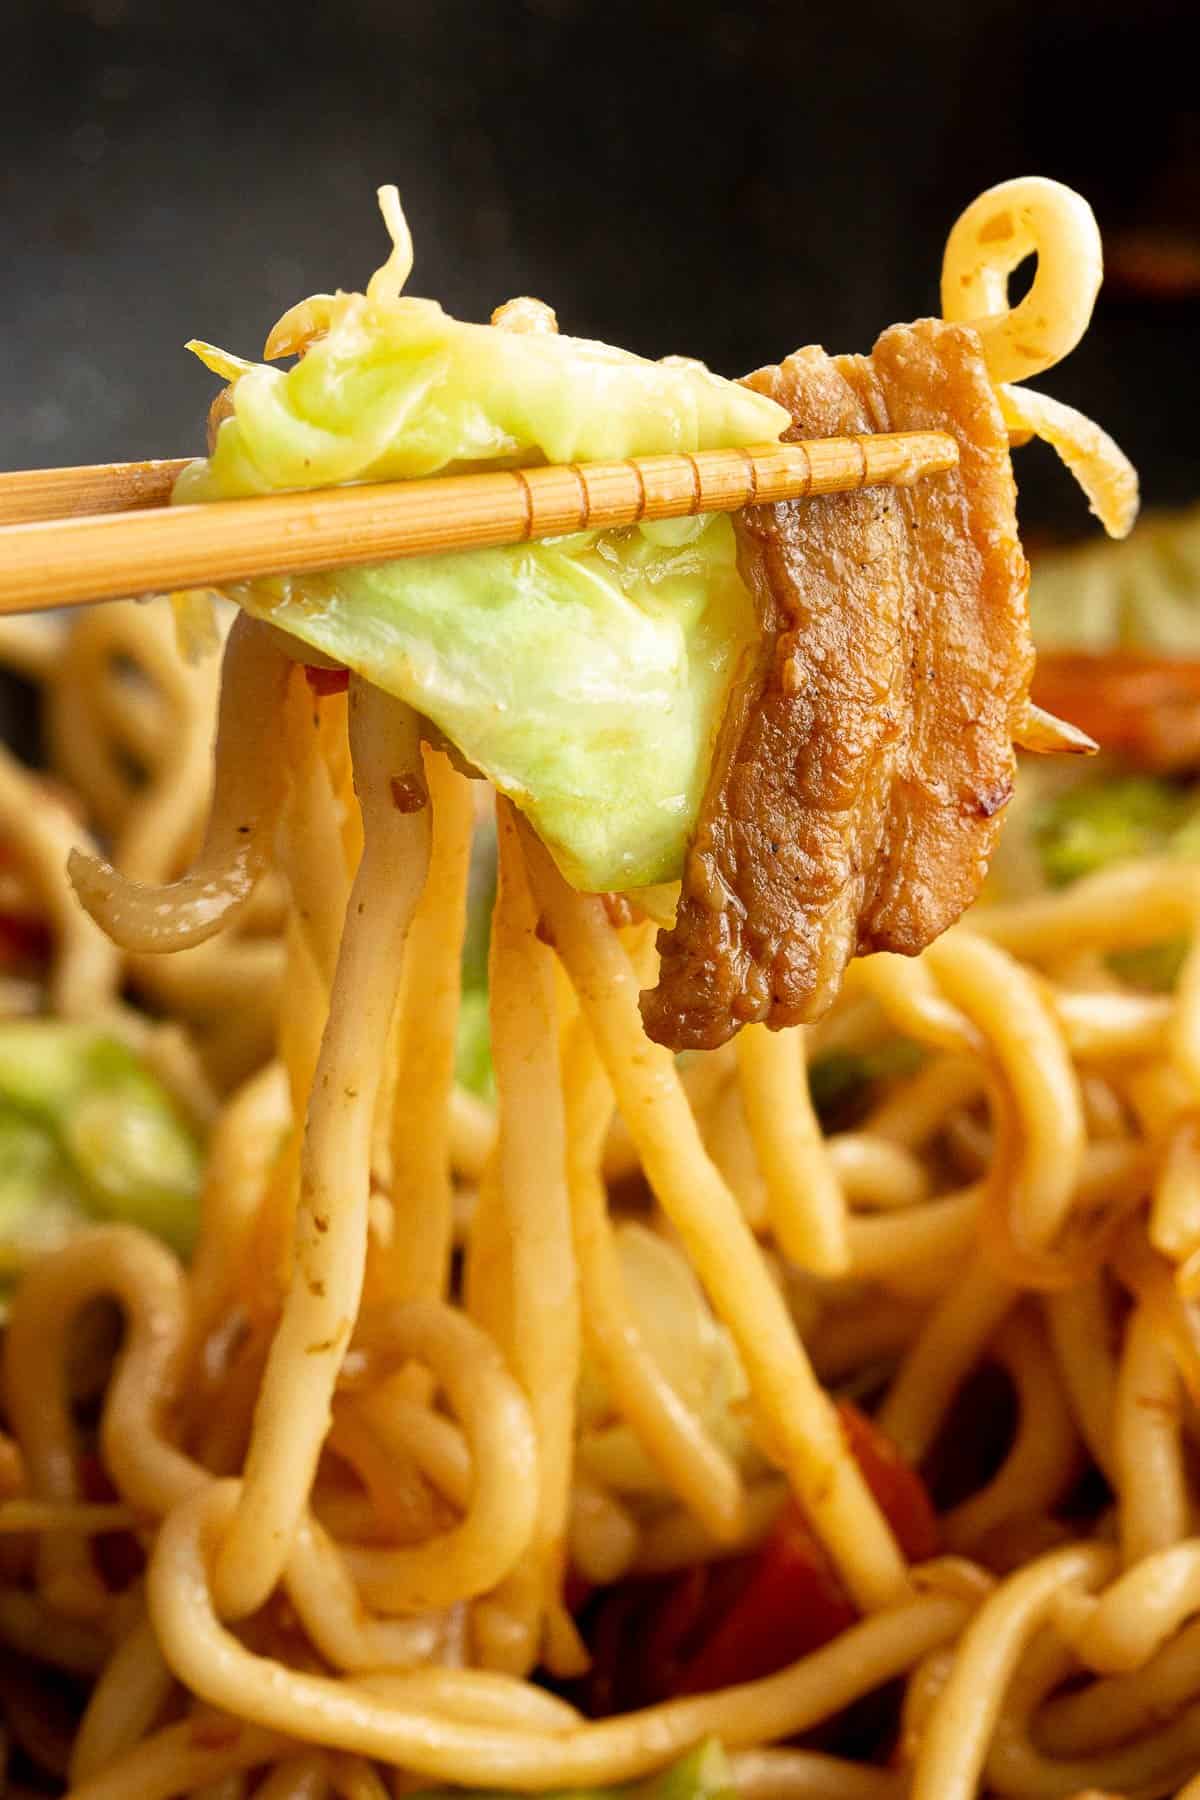 Pork, cabbage and udon noodles on a chopstick.